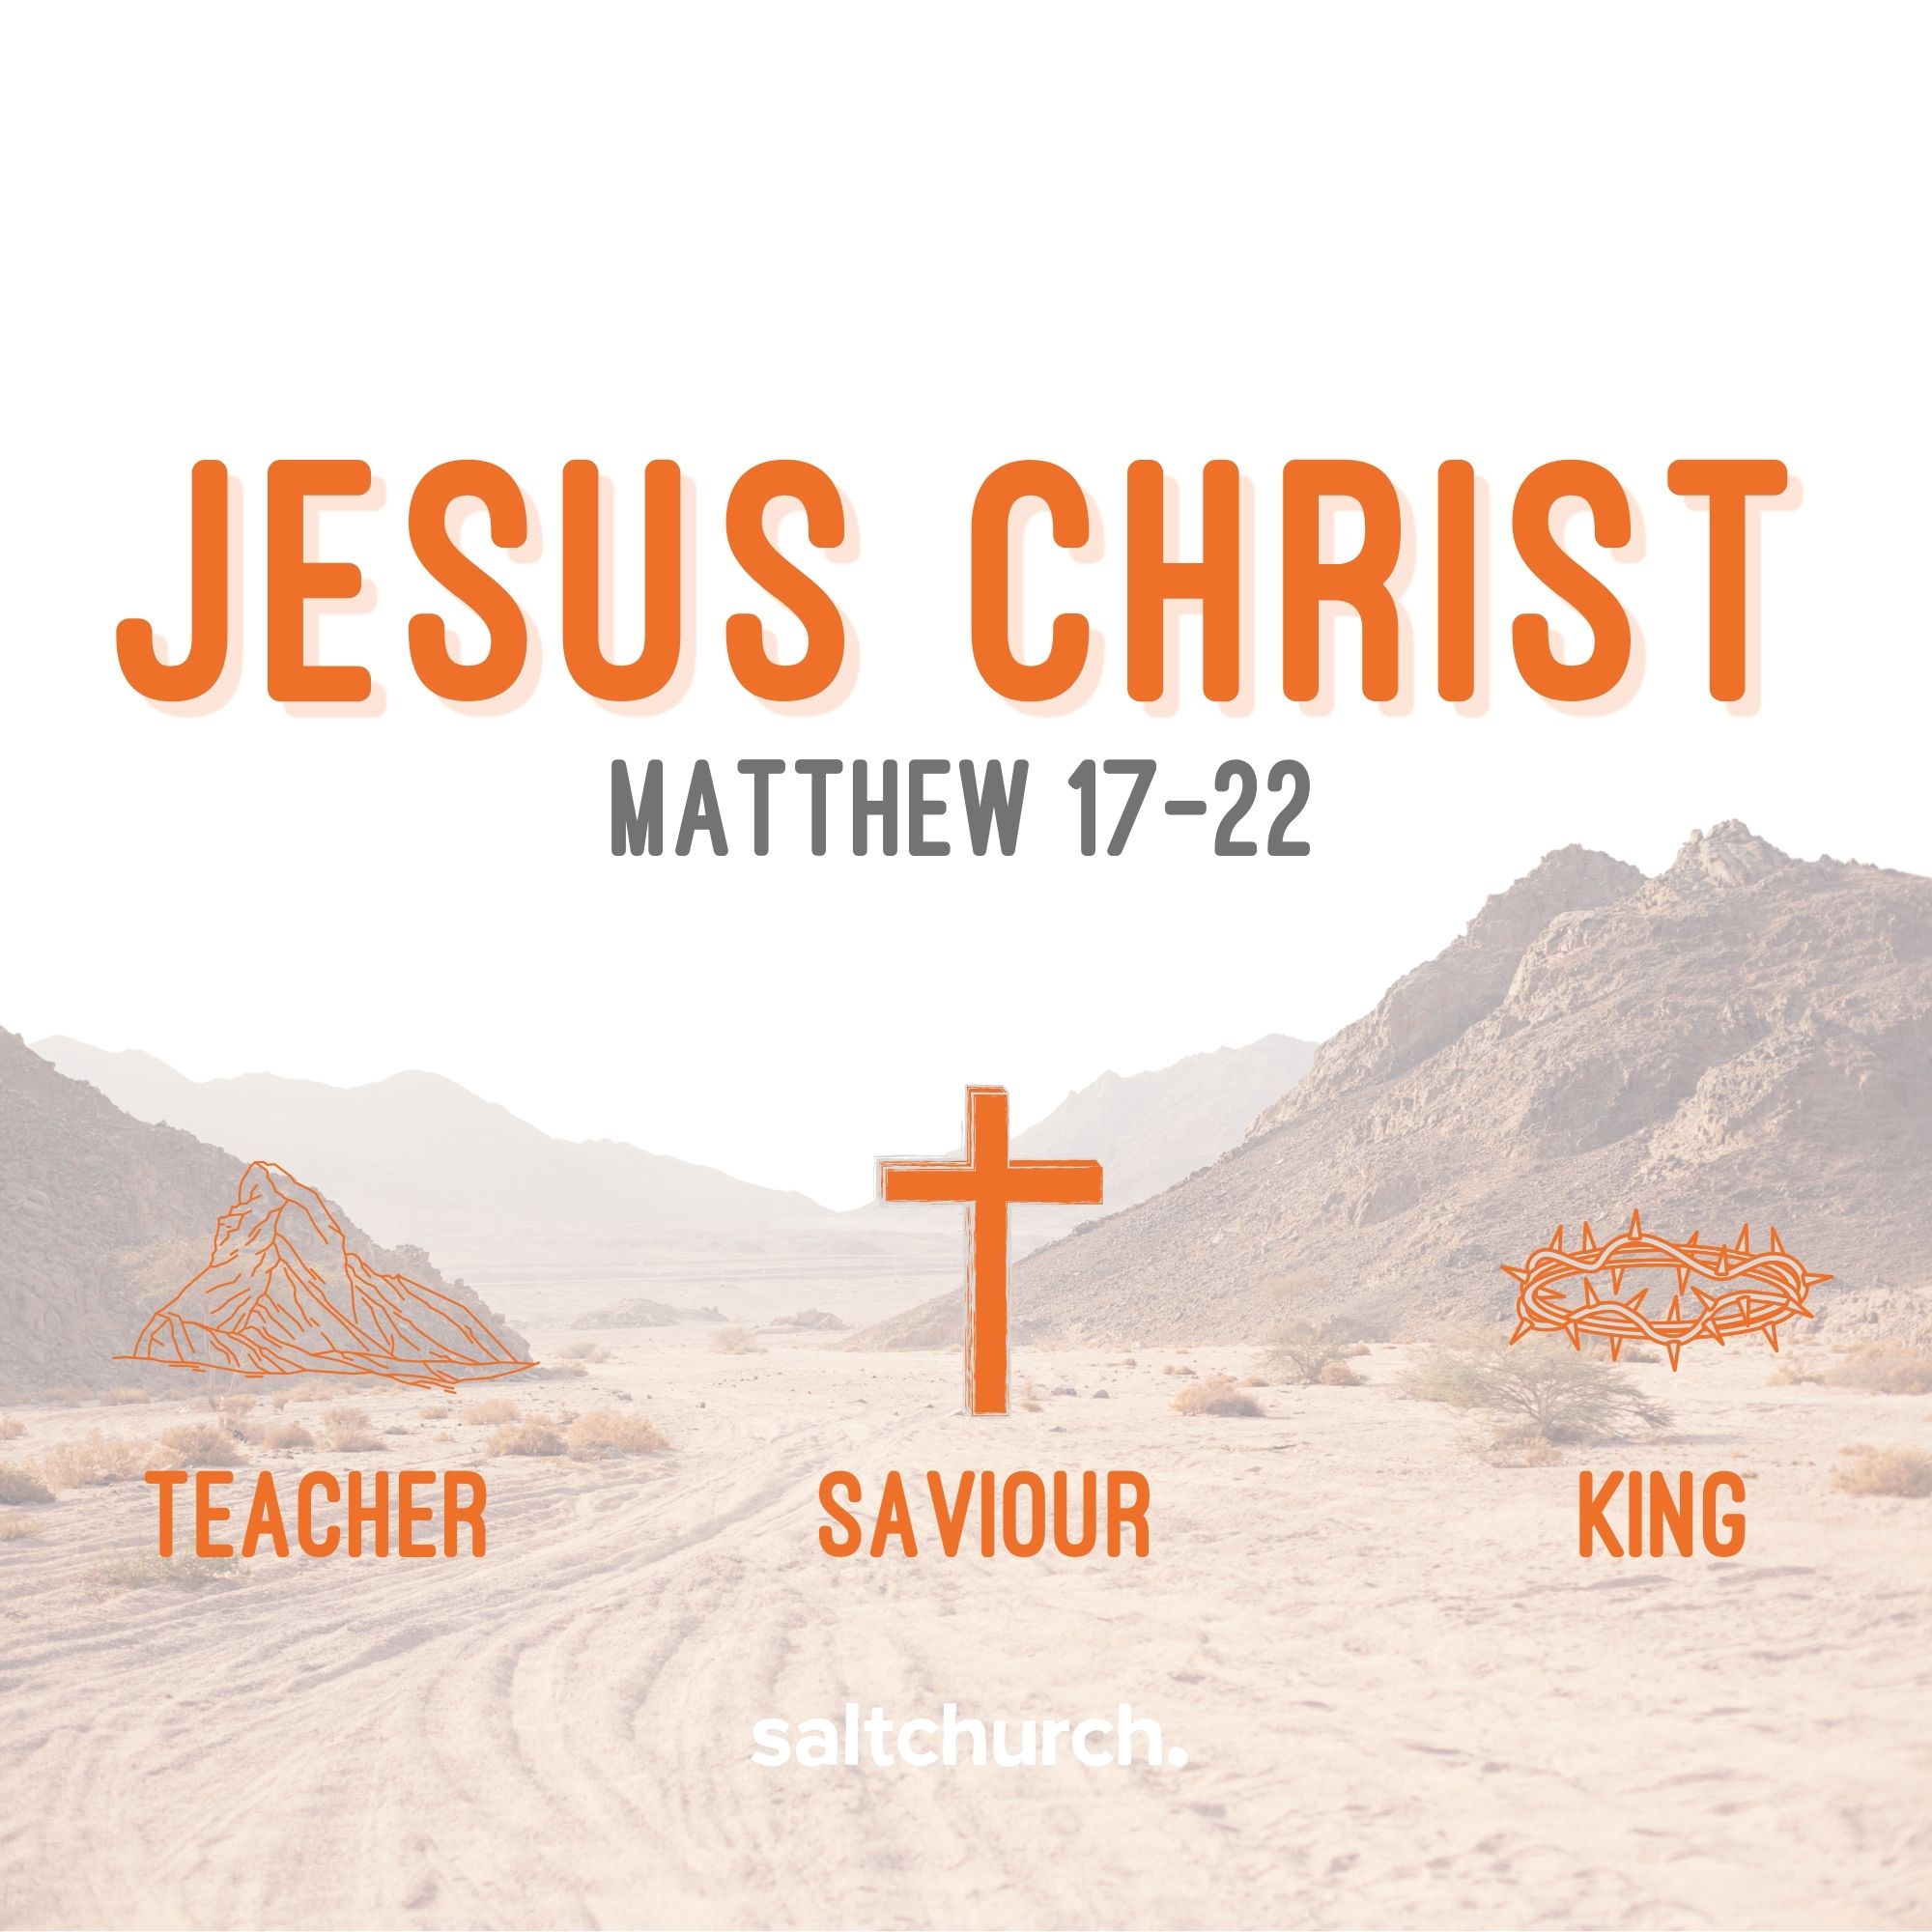 A refined response to Jesus (Matthew 21)